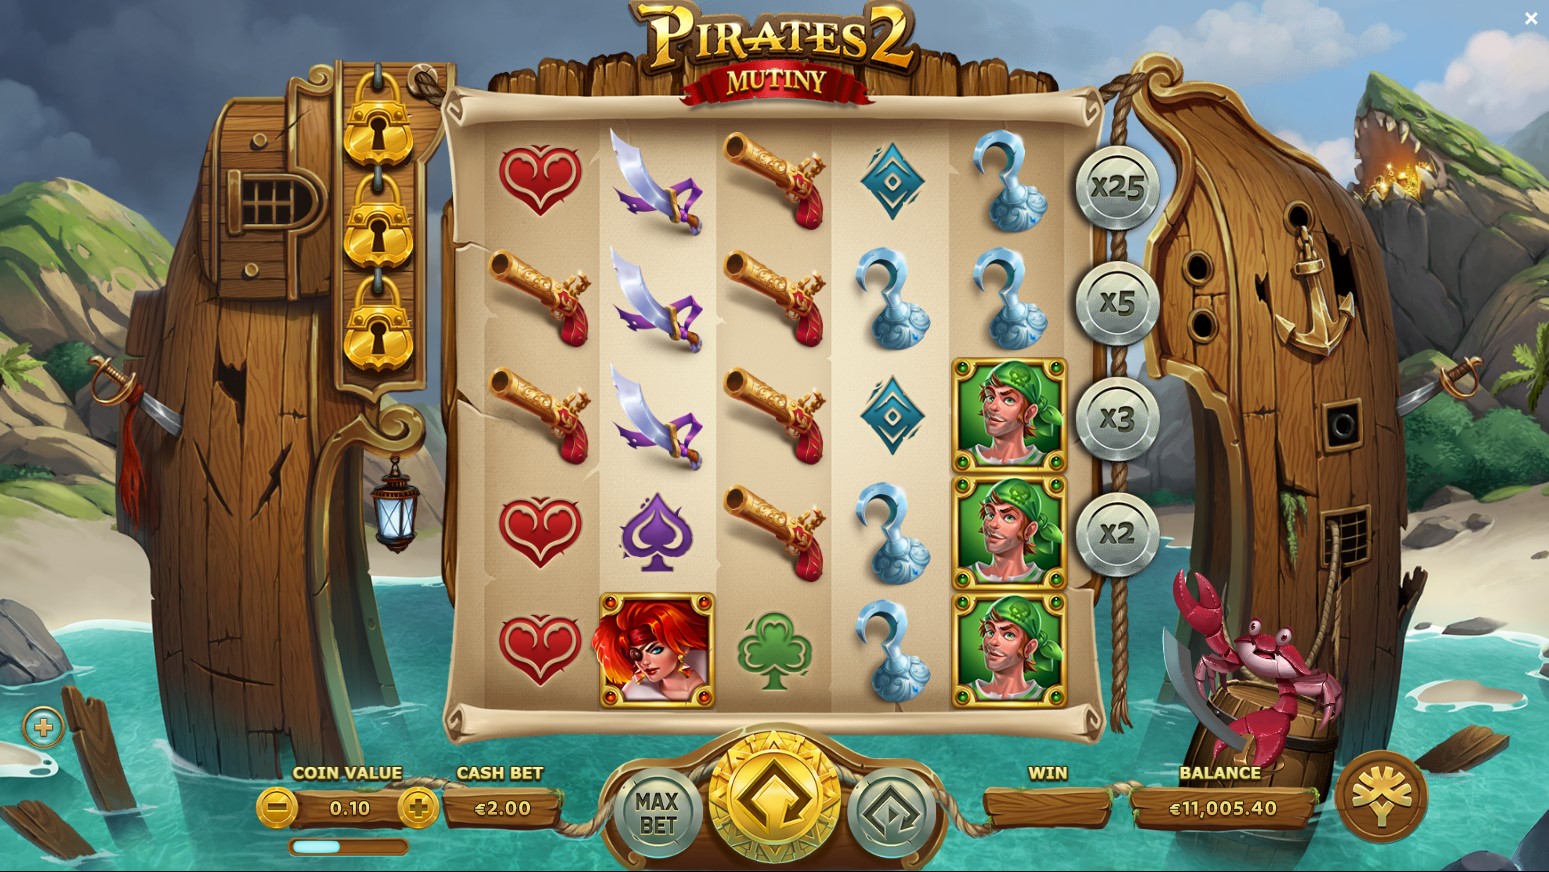 Pirates 2 Mutiny 3 Yggdrasil